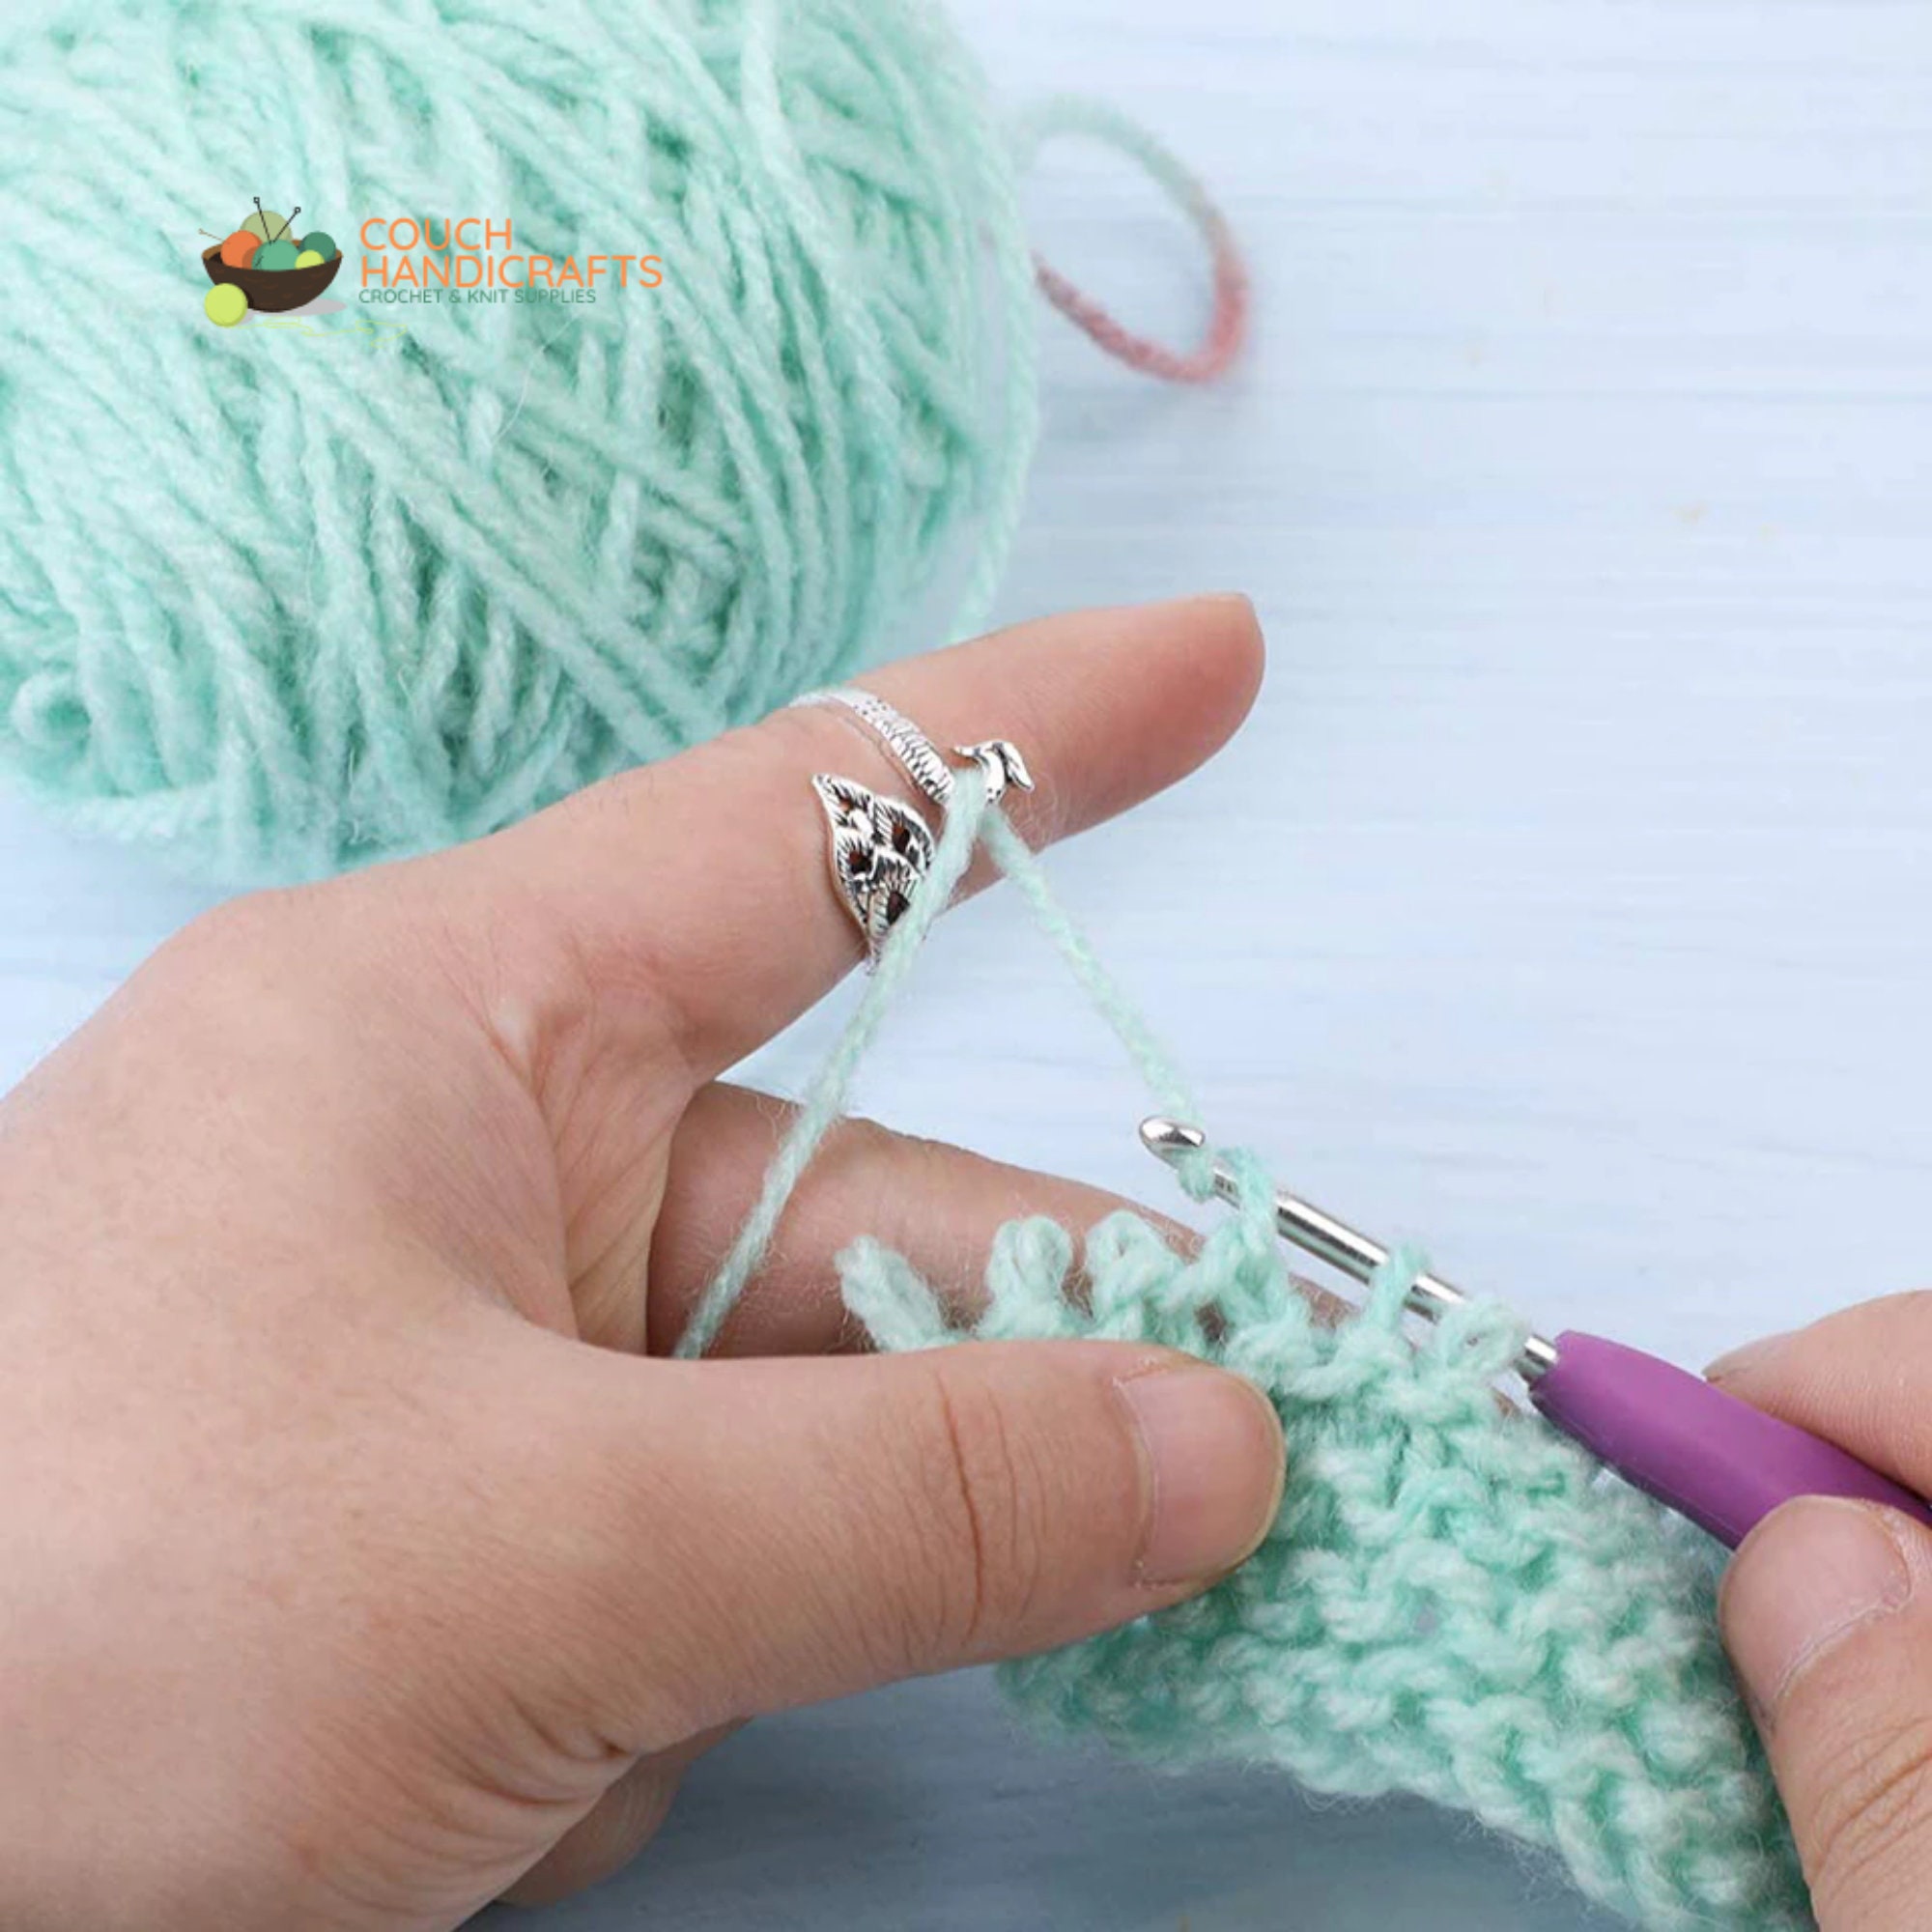 Adjustable Knitting Crochet Ring Yarn Ring Crochet Knitting Accessories Knitting  Ring Finger Wear Thimble Best Gifts